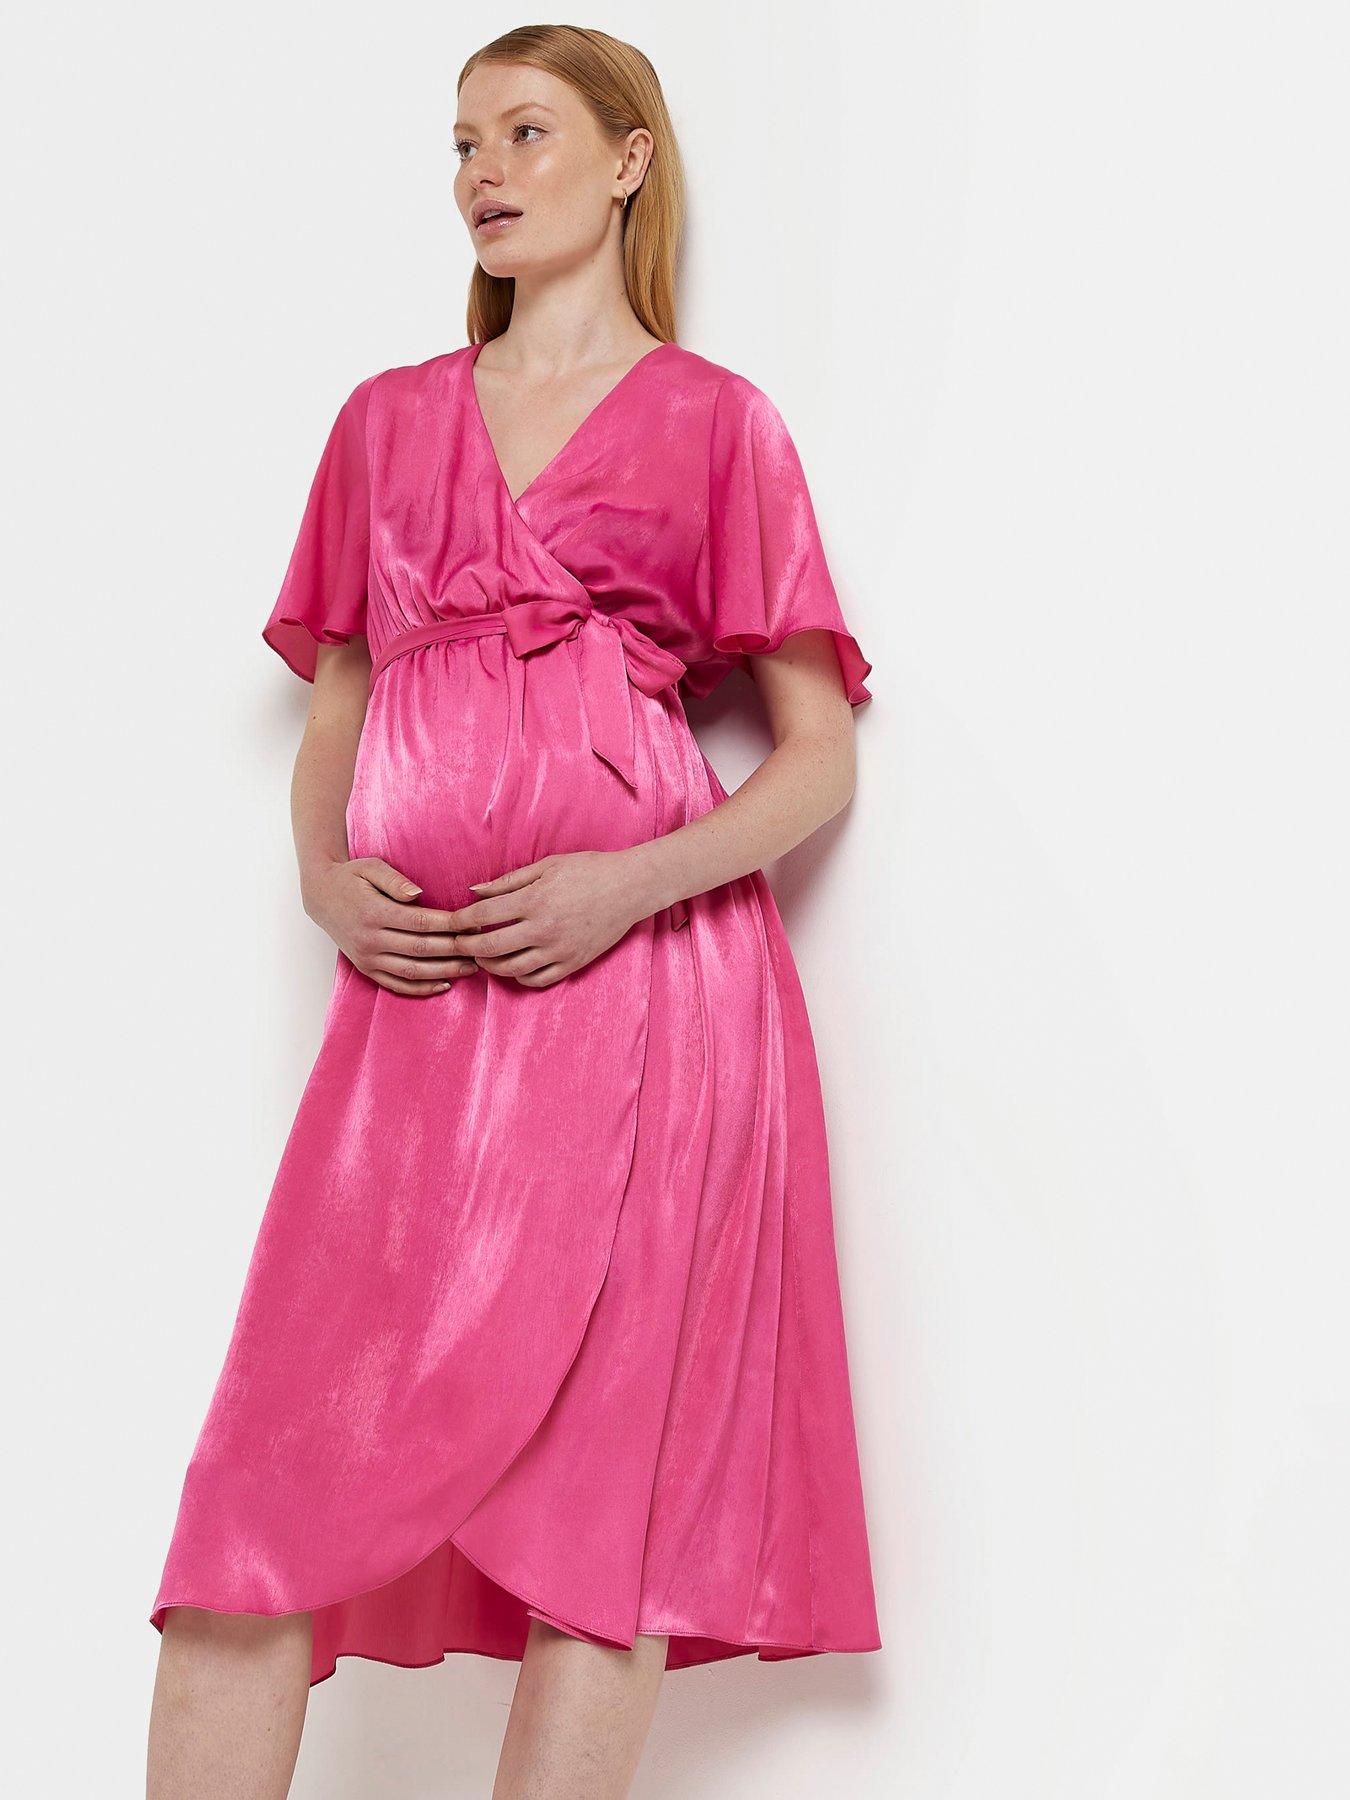 Fashionable Pregnancy Attire Stock Photos - 345 Images